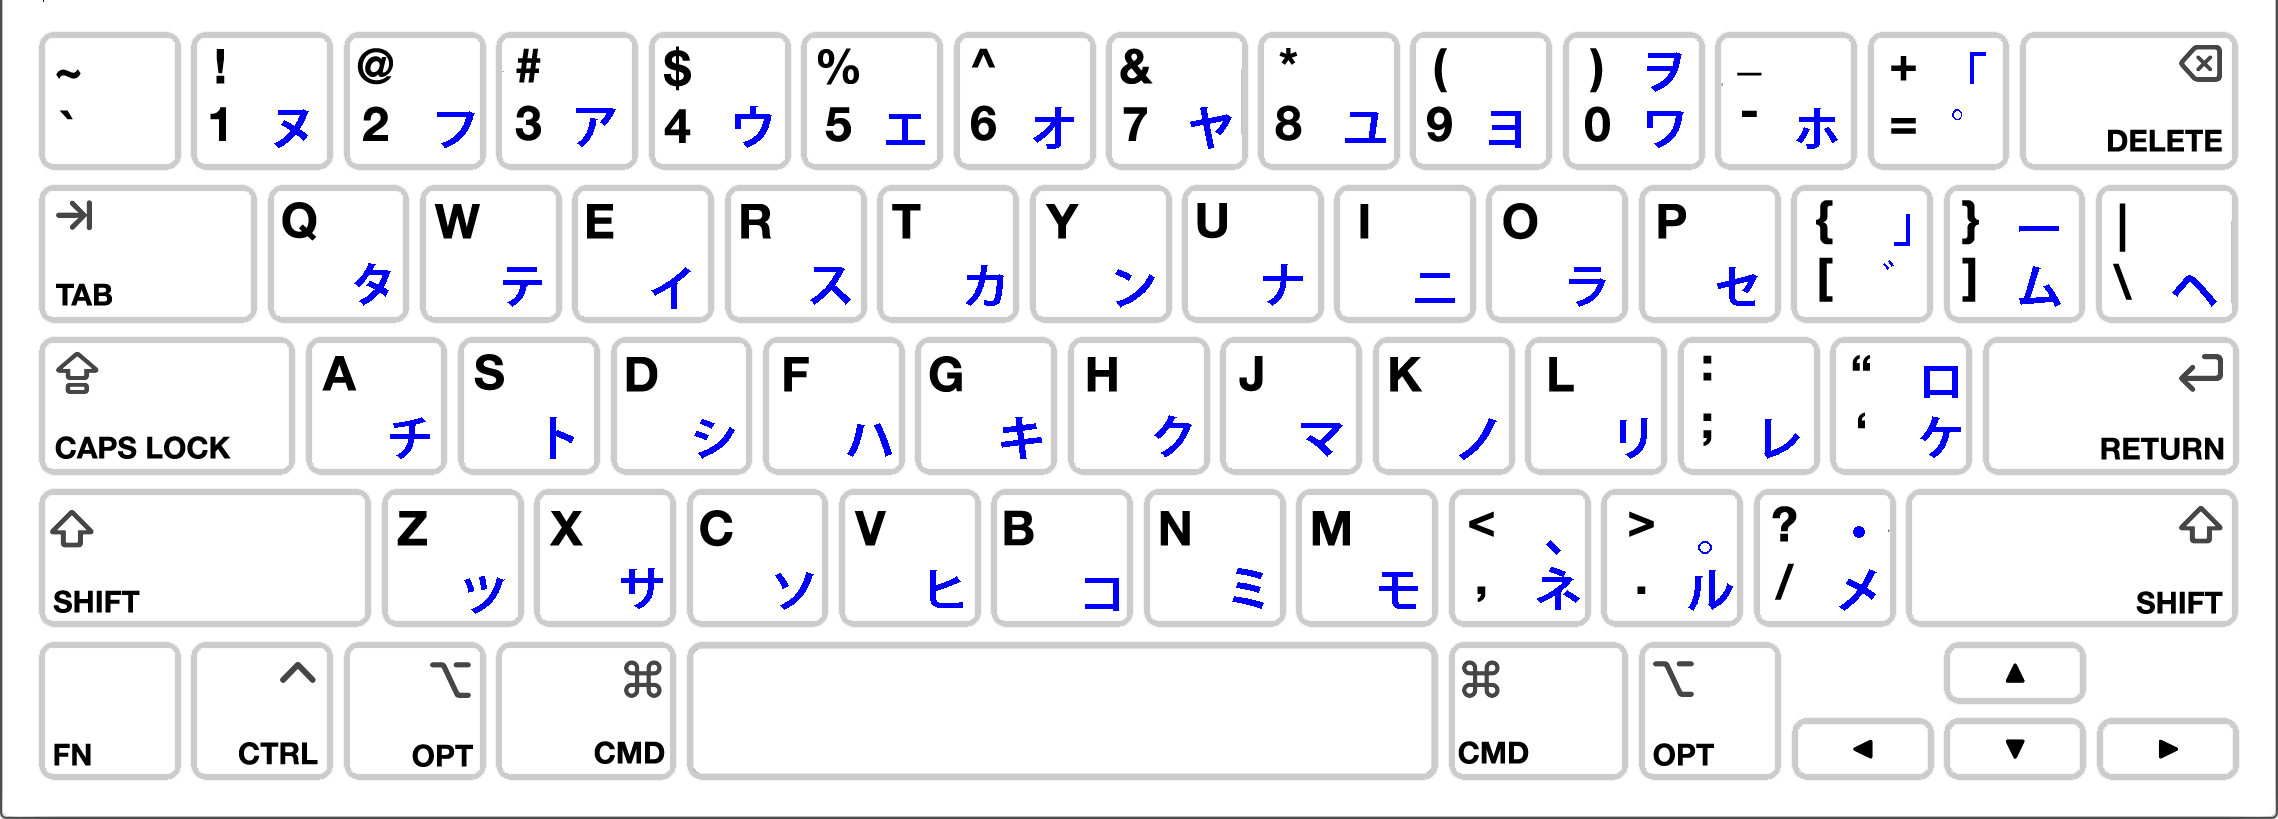 Japanese Keyboard Katakana Layout